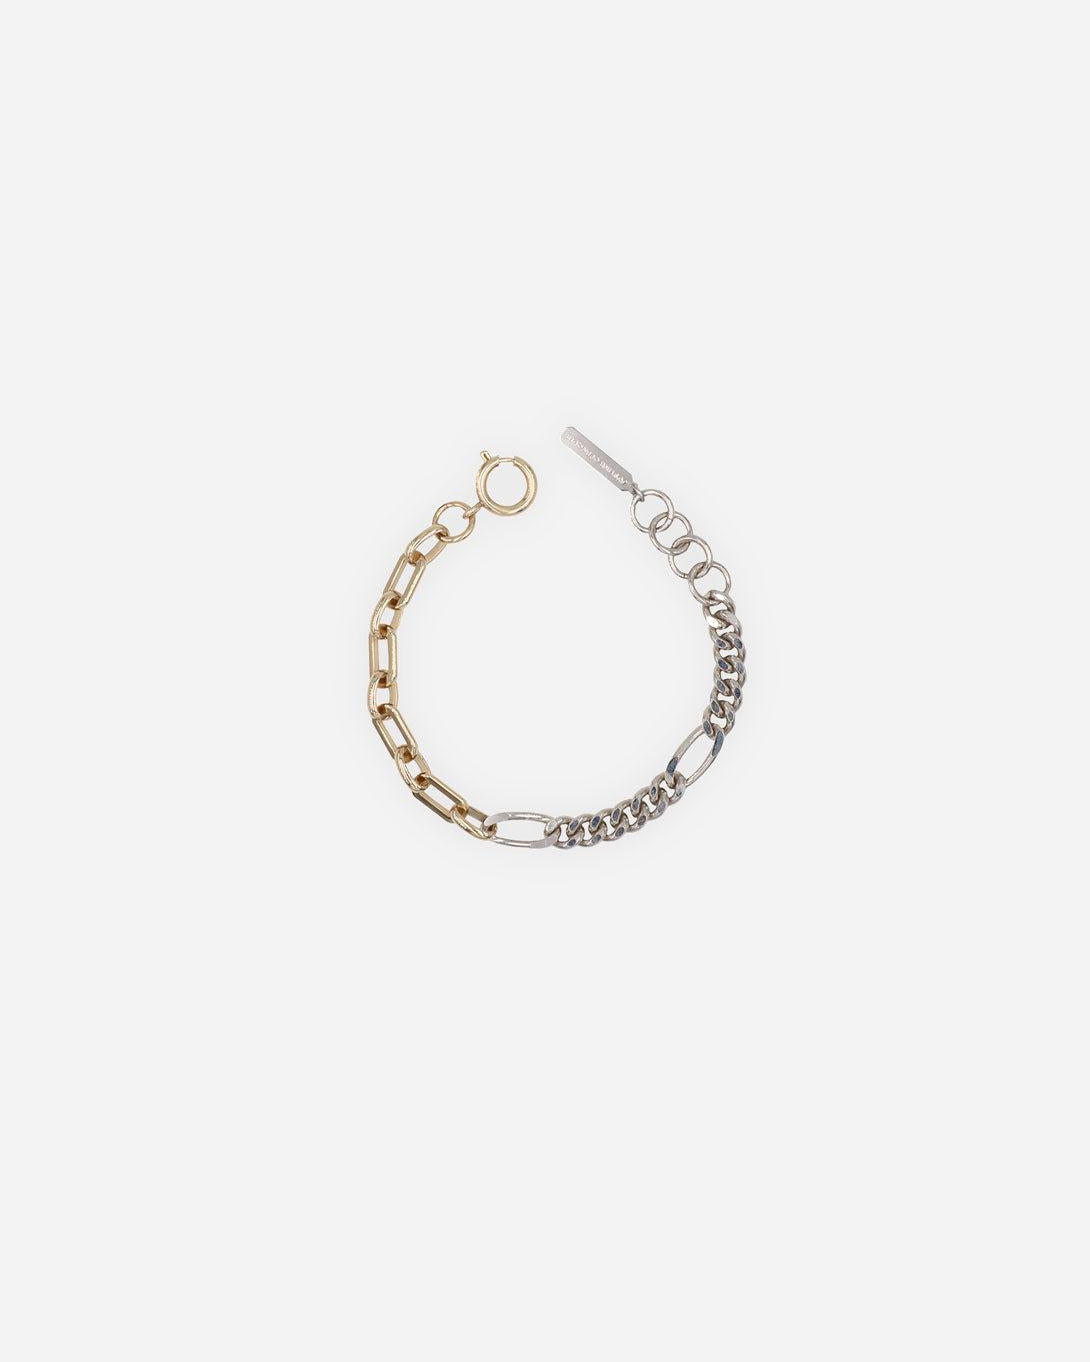 Vesper Bracelet - Jewelry - Justine Clenquet - Elevastor